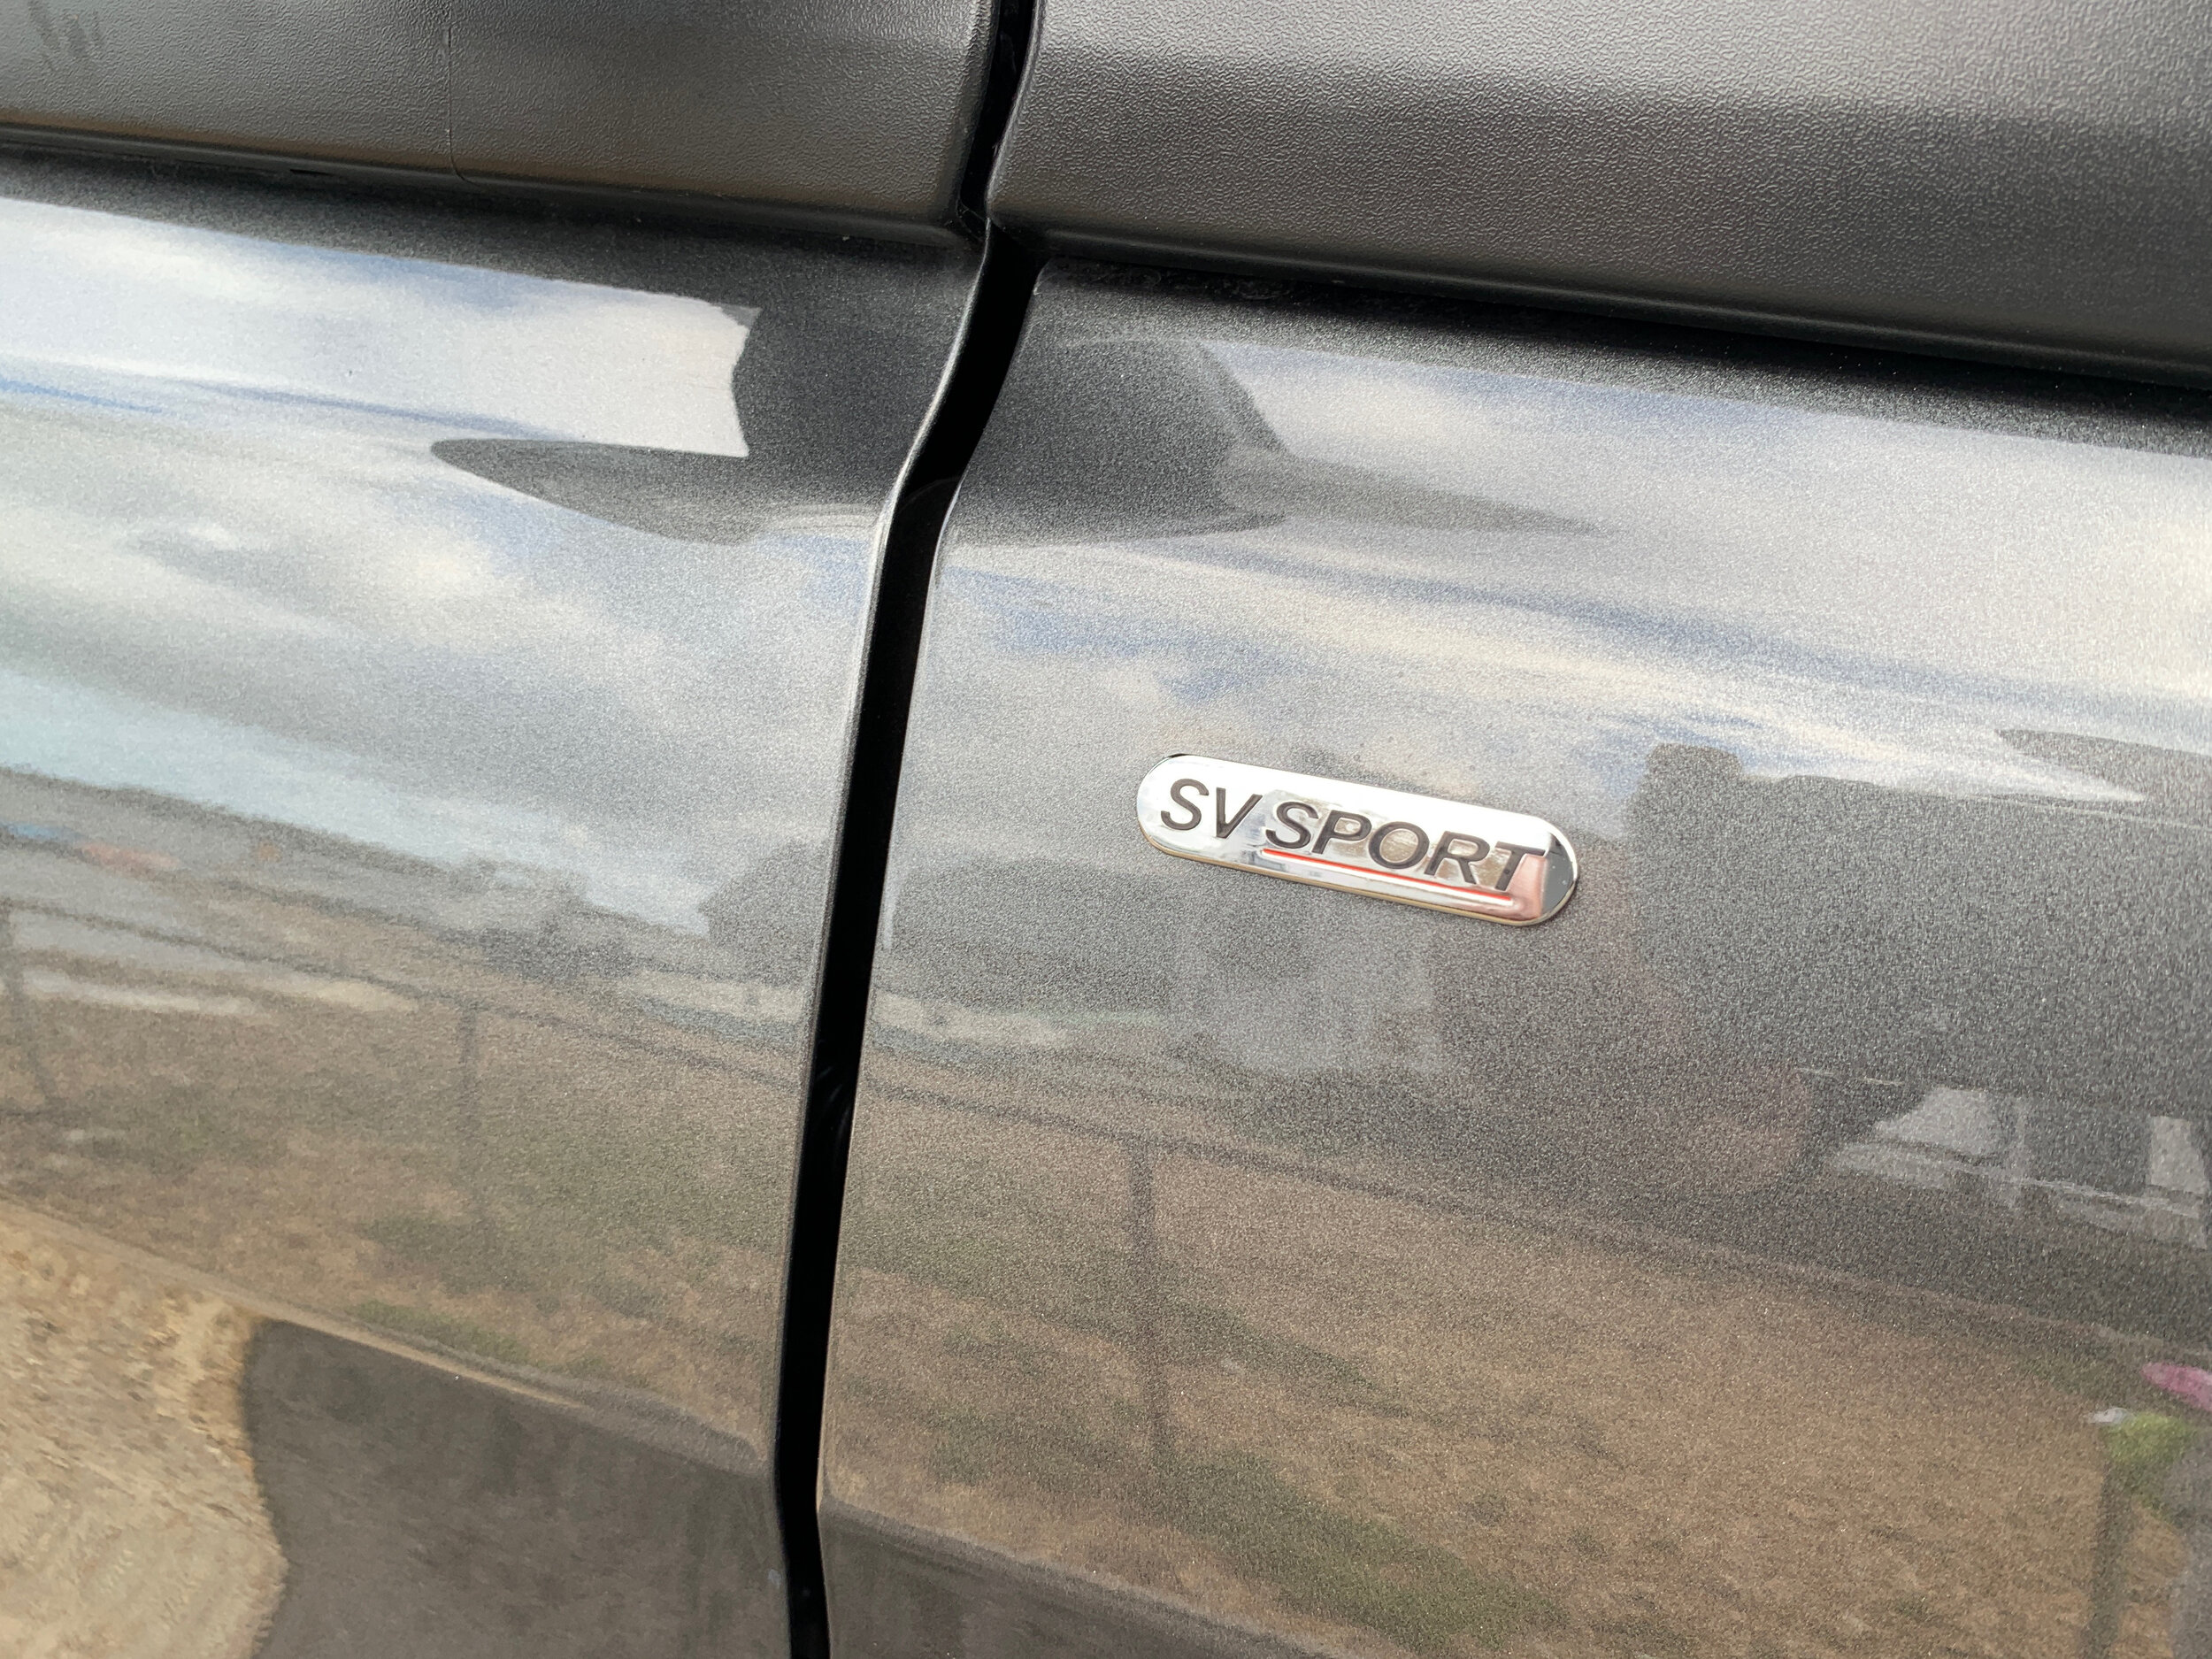 Ford Trabist Custom SV Sport Badge .jpg